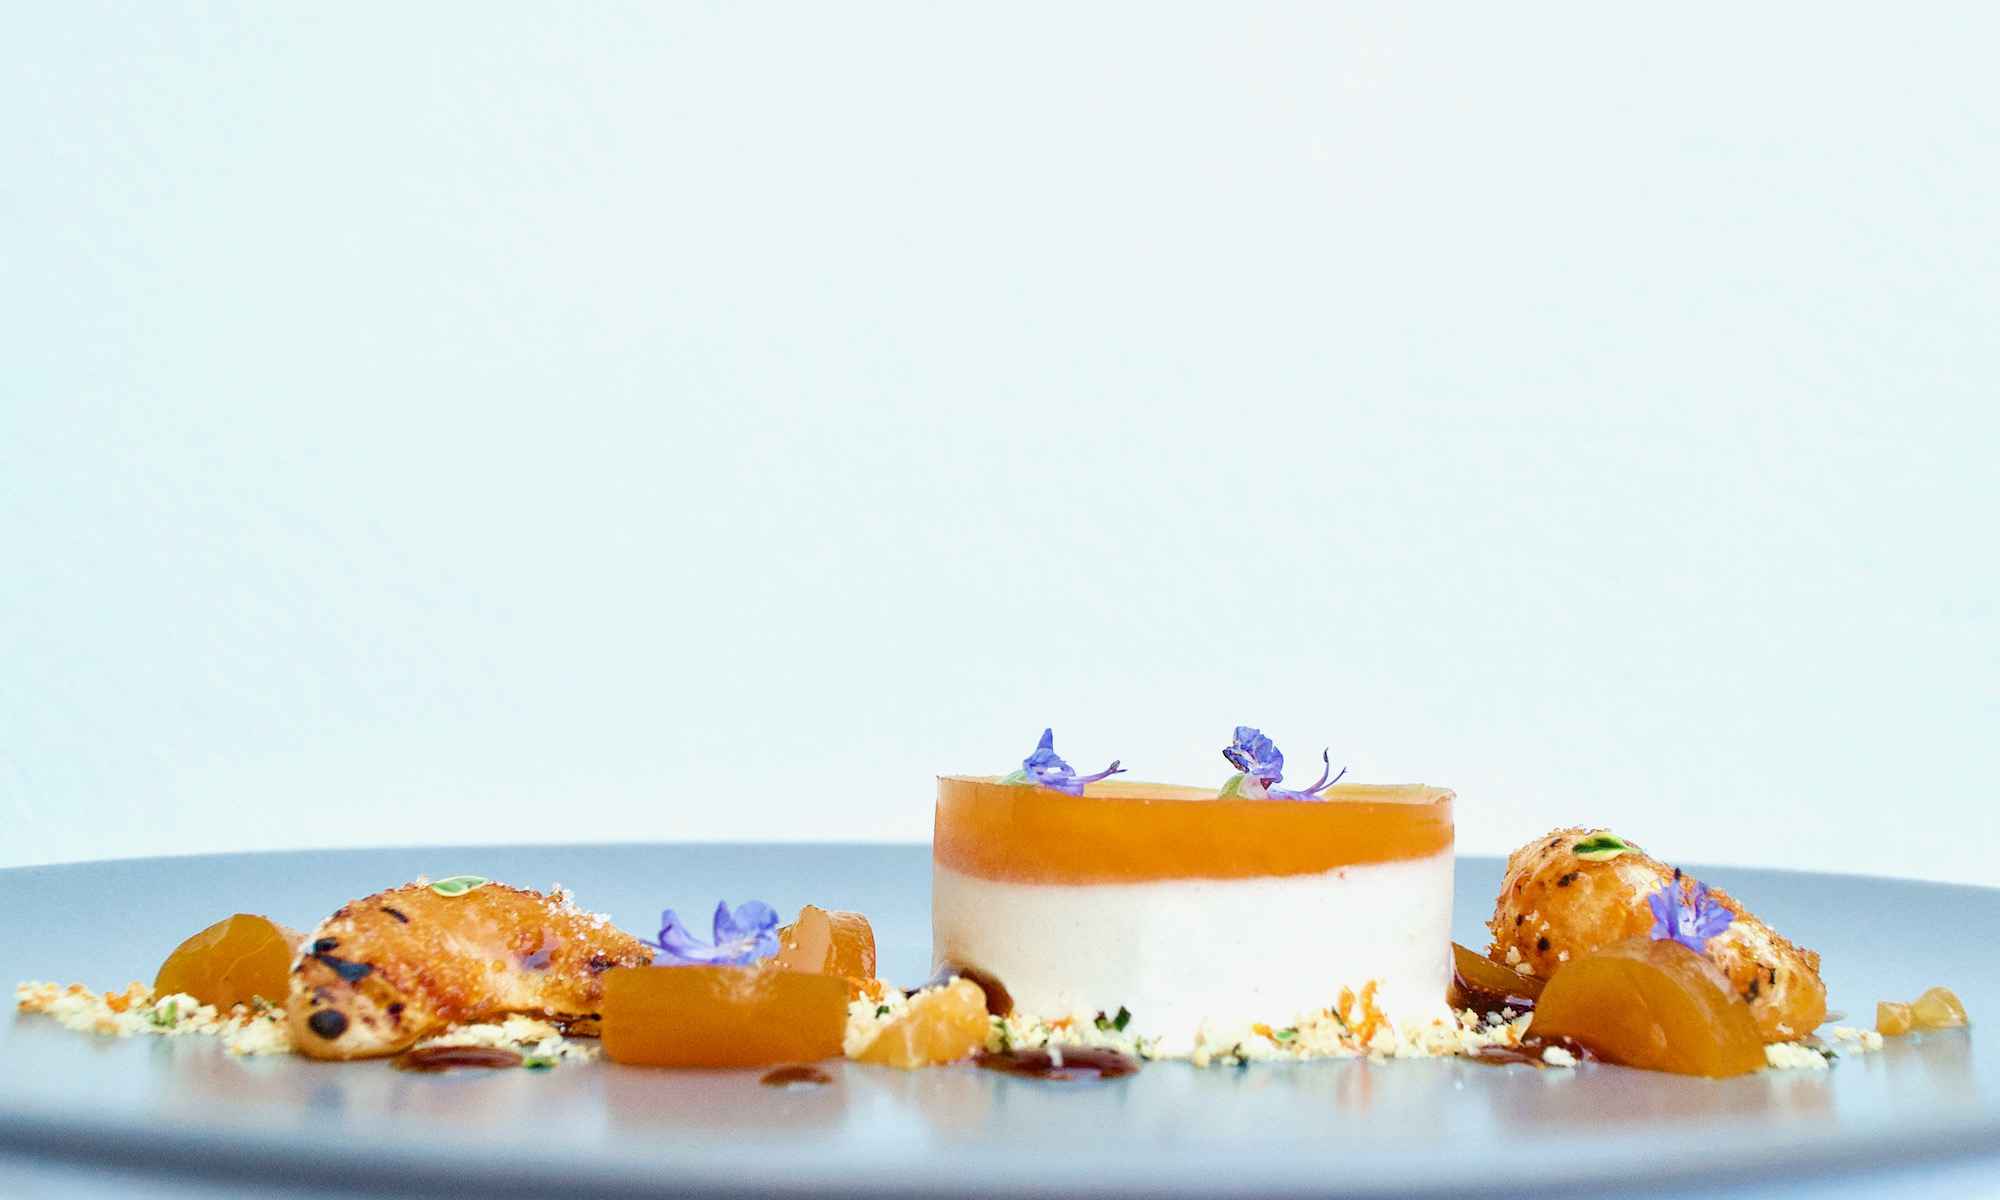 Clementine & Earl Grey tea parfait - Side view - Dessert by Pollensa Private Chefs